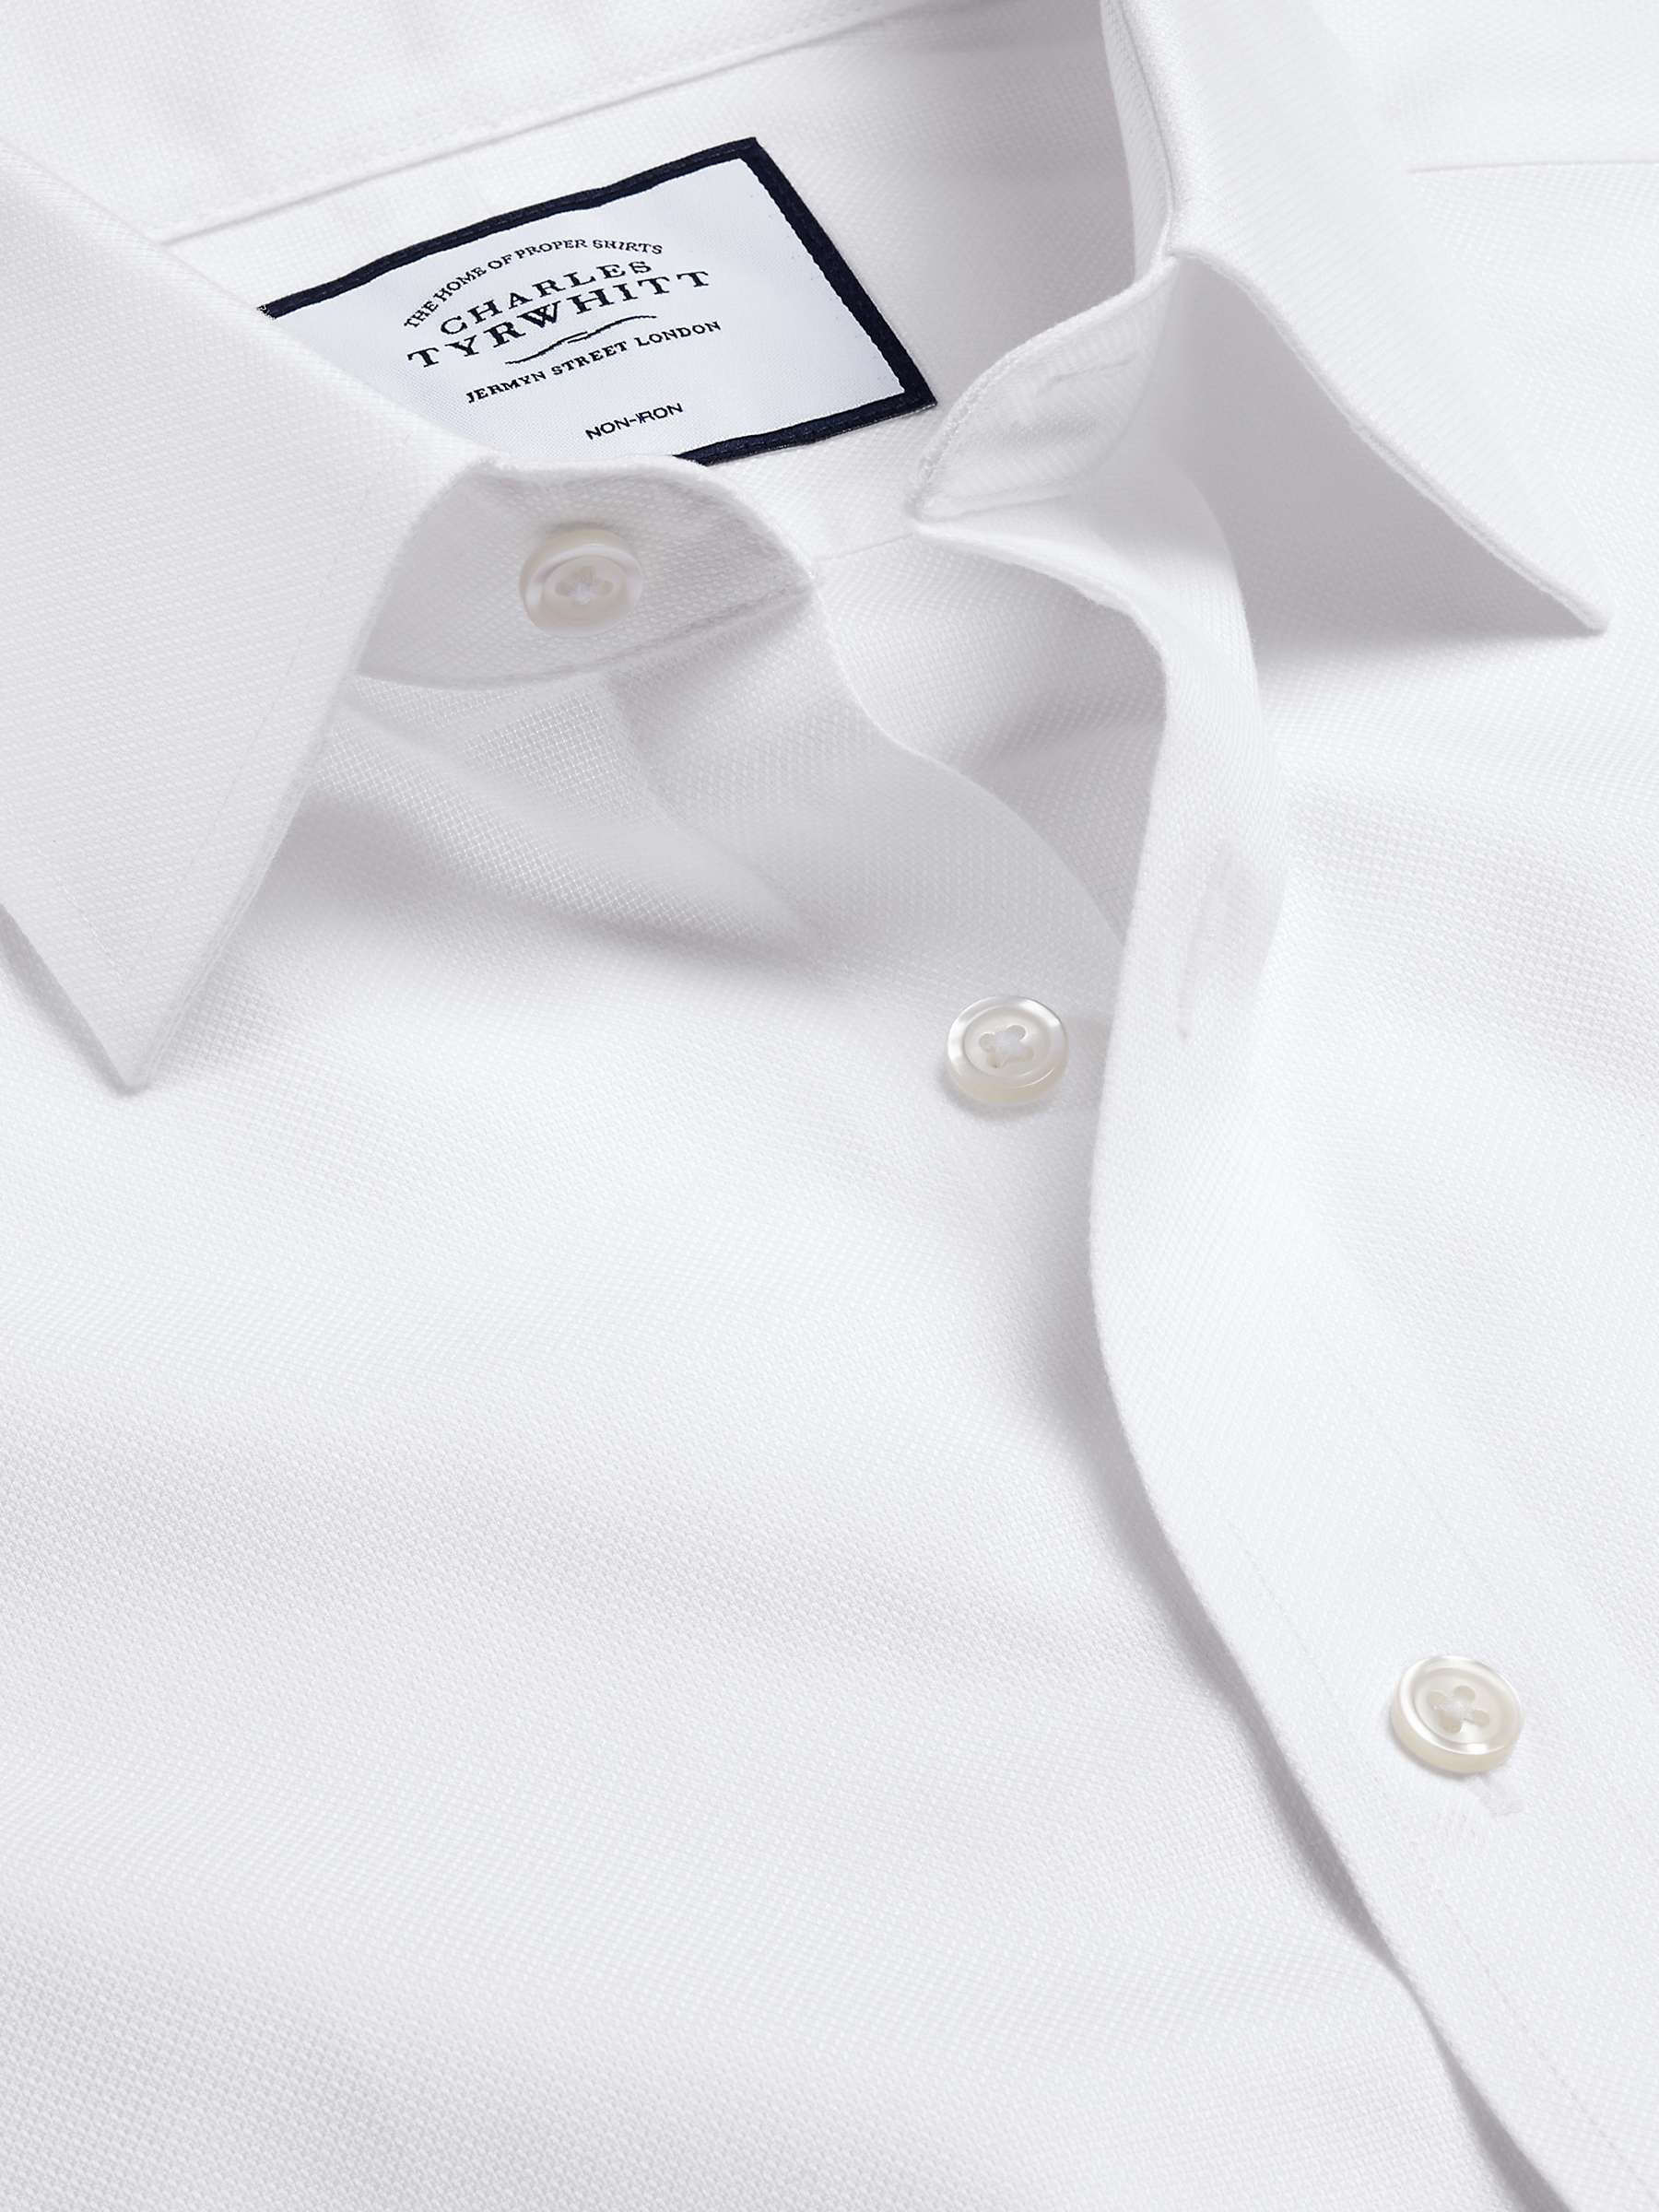 Buy Charles Tyrwhitt Non-Iron Slim Fit Oxford Shirt, White Online at johnlewis.com